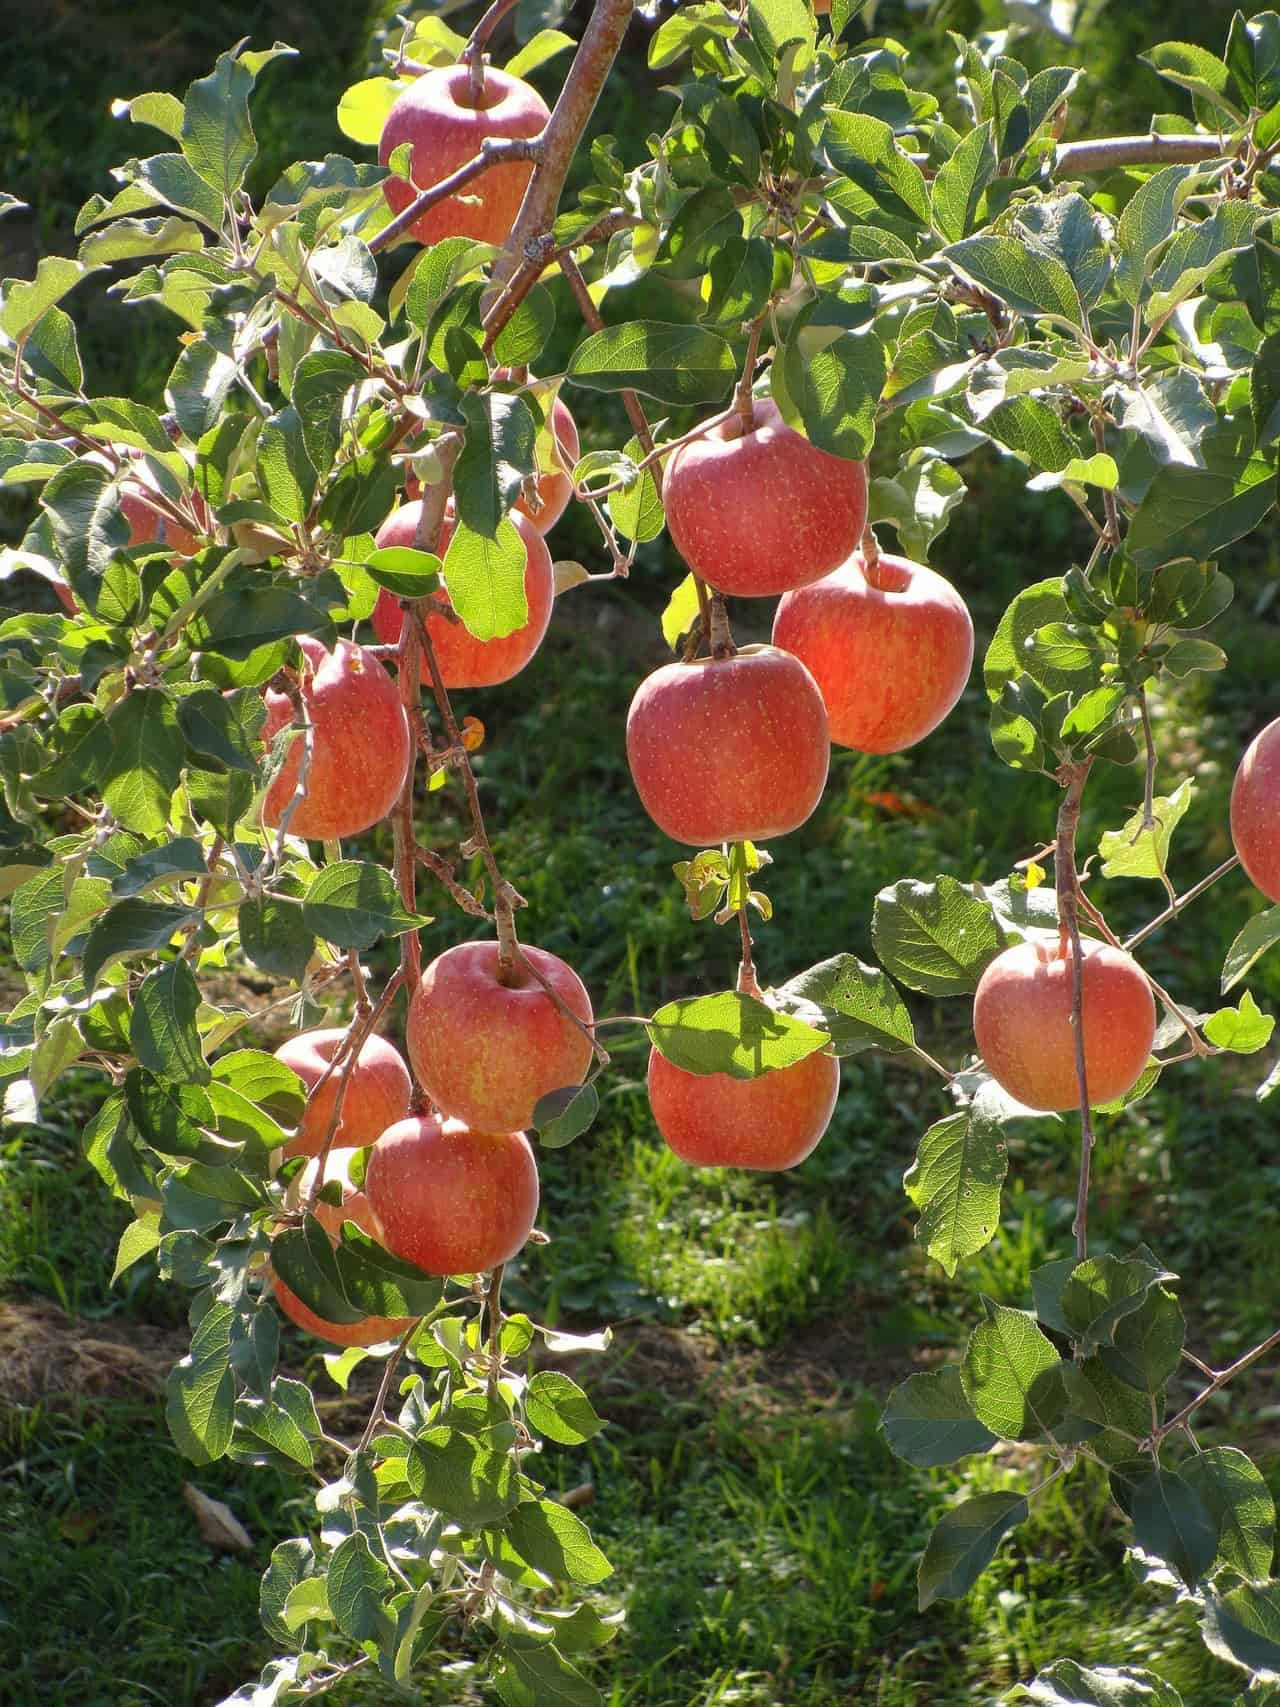 Fuji Apples vs. Gala Apples (+ Recipes!) - Urban Farmie